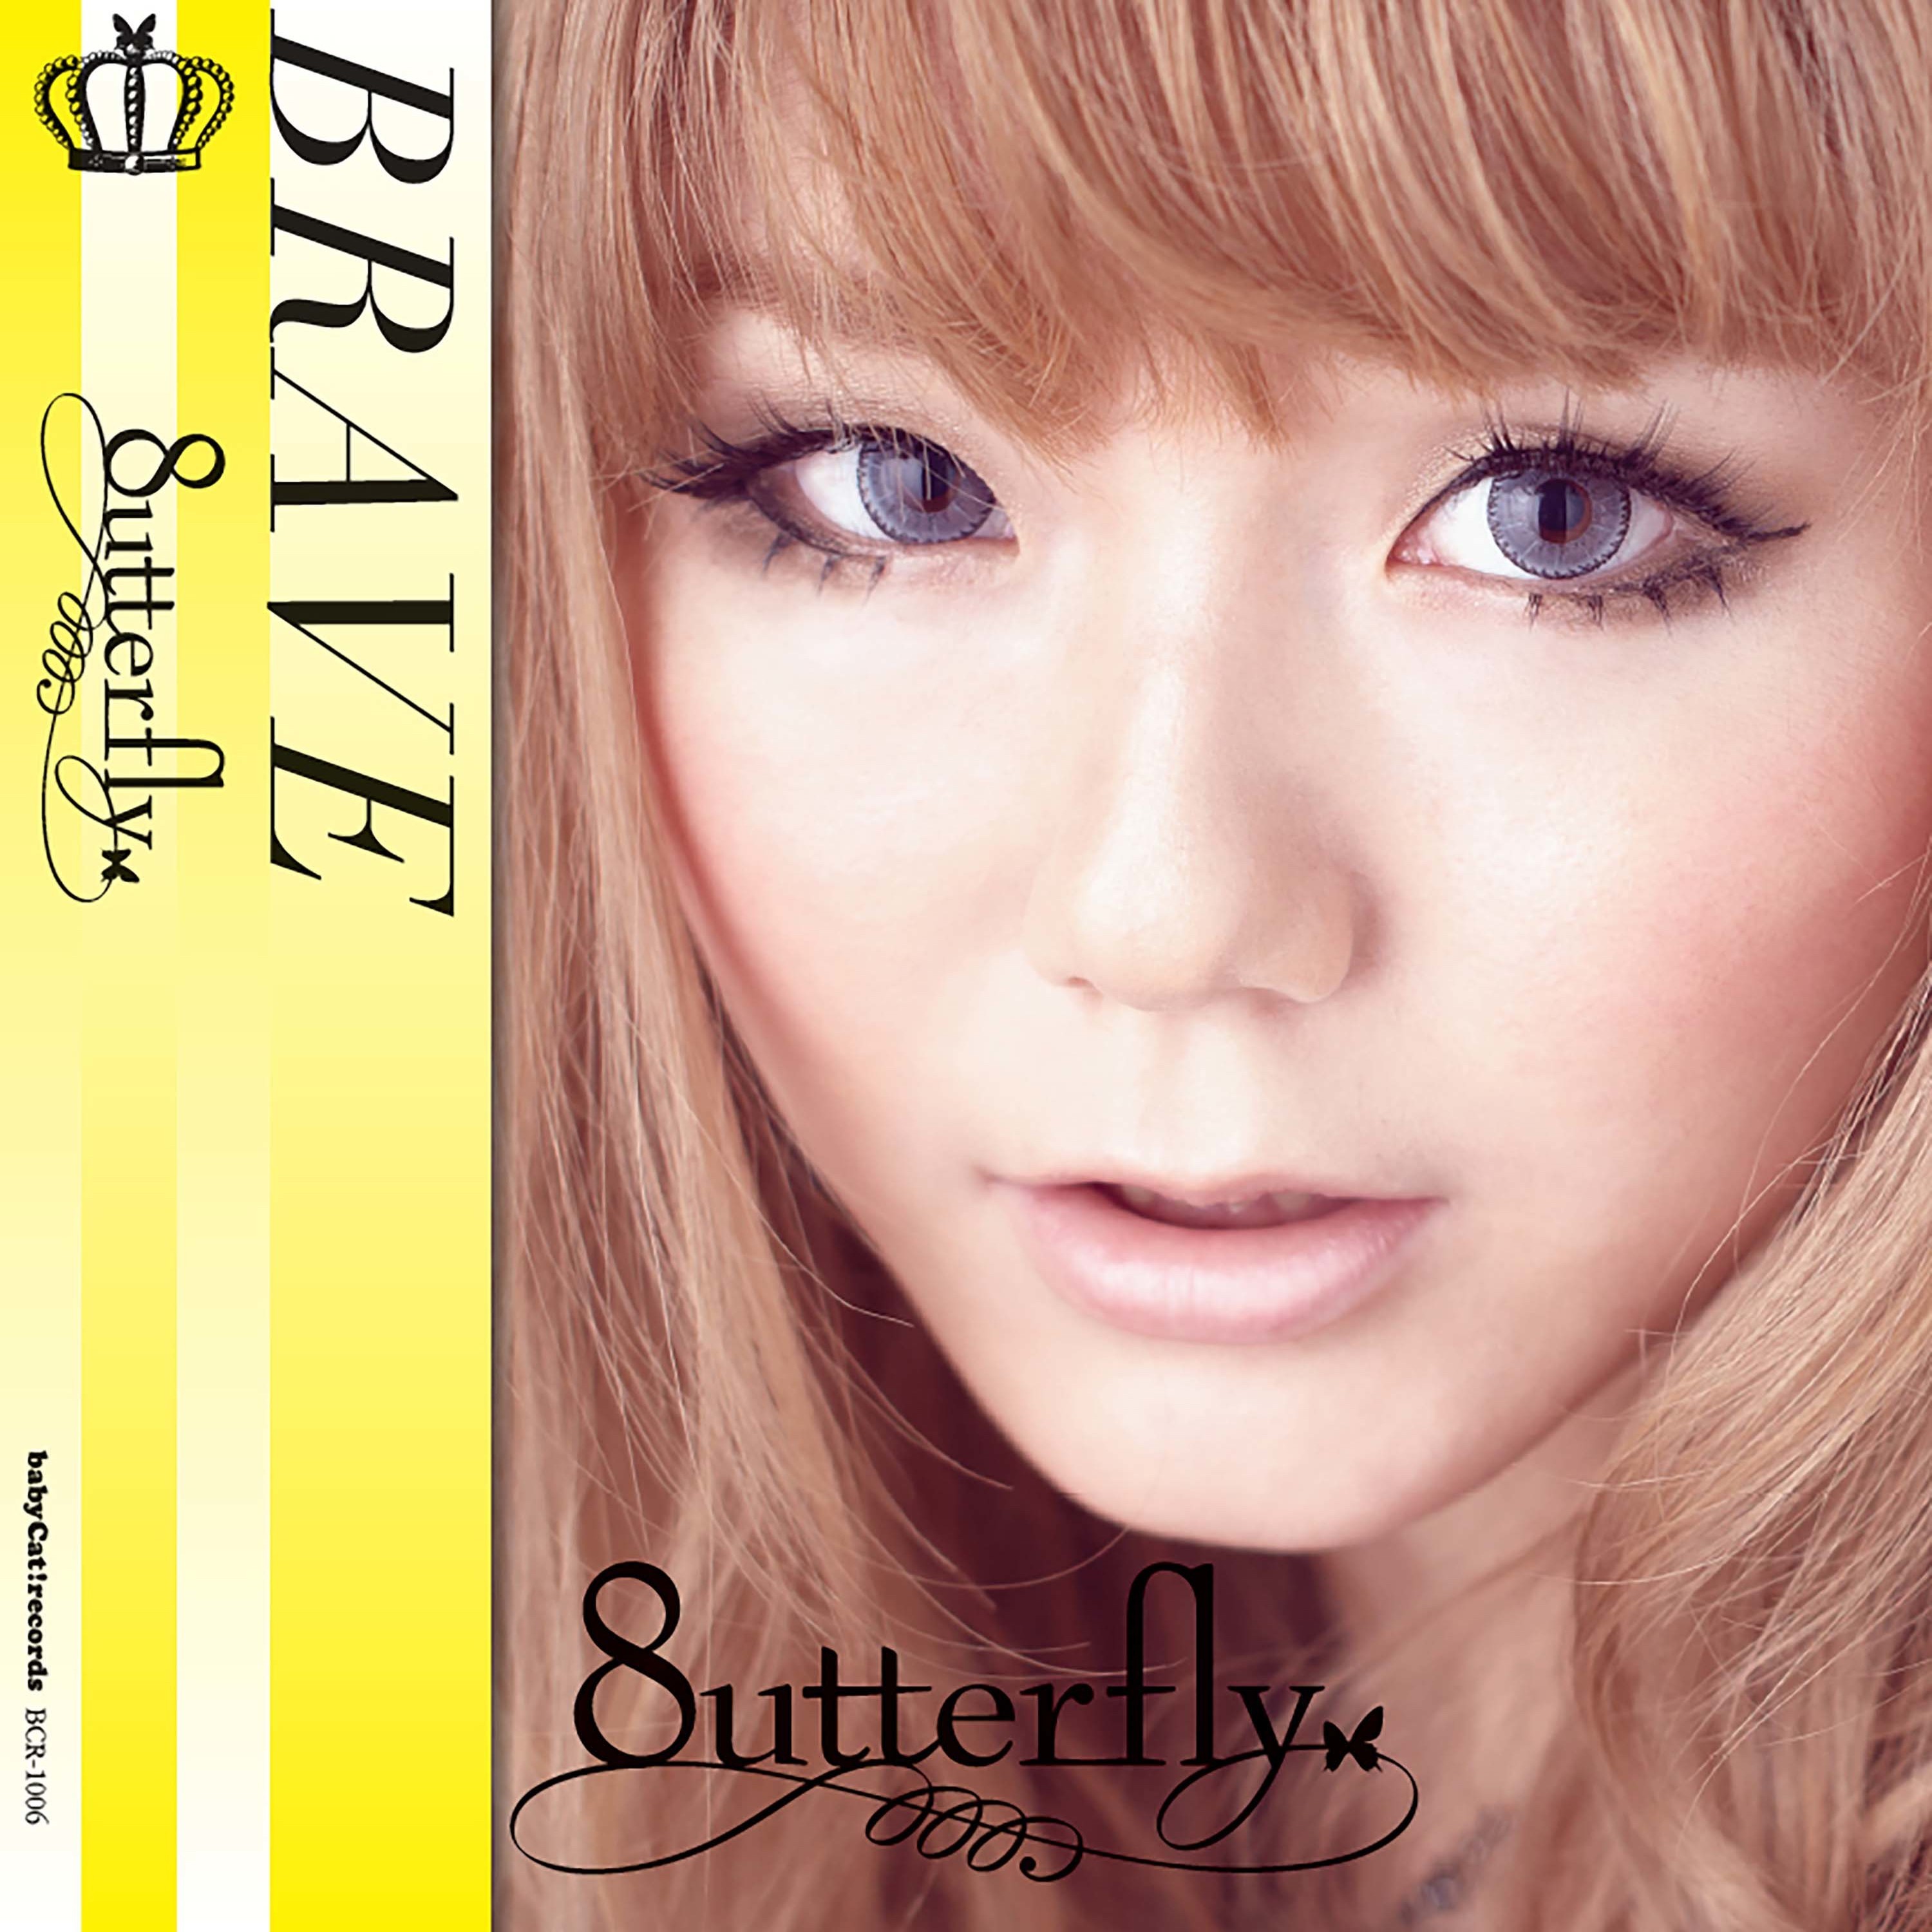 8utterfly - BRAVE (2013-08-07) [FLAC 24bit/44,1kHz] Download